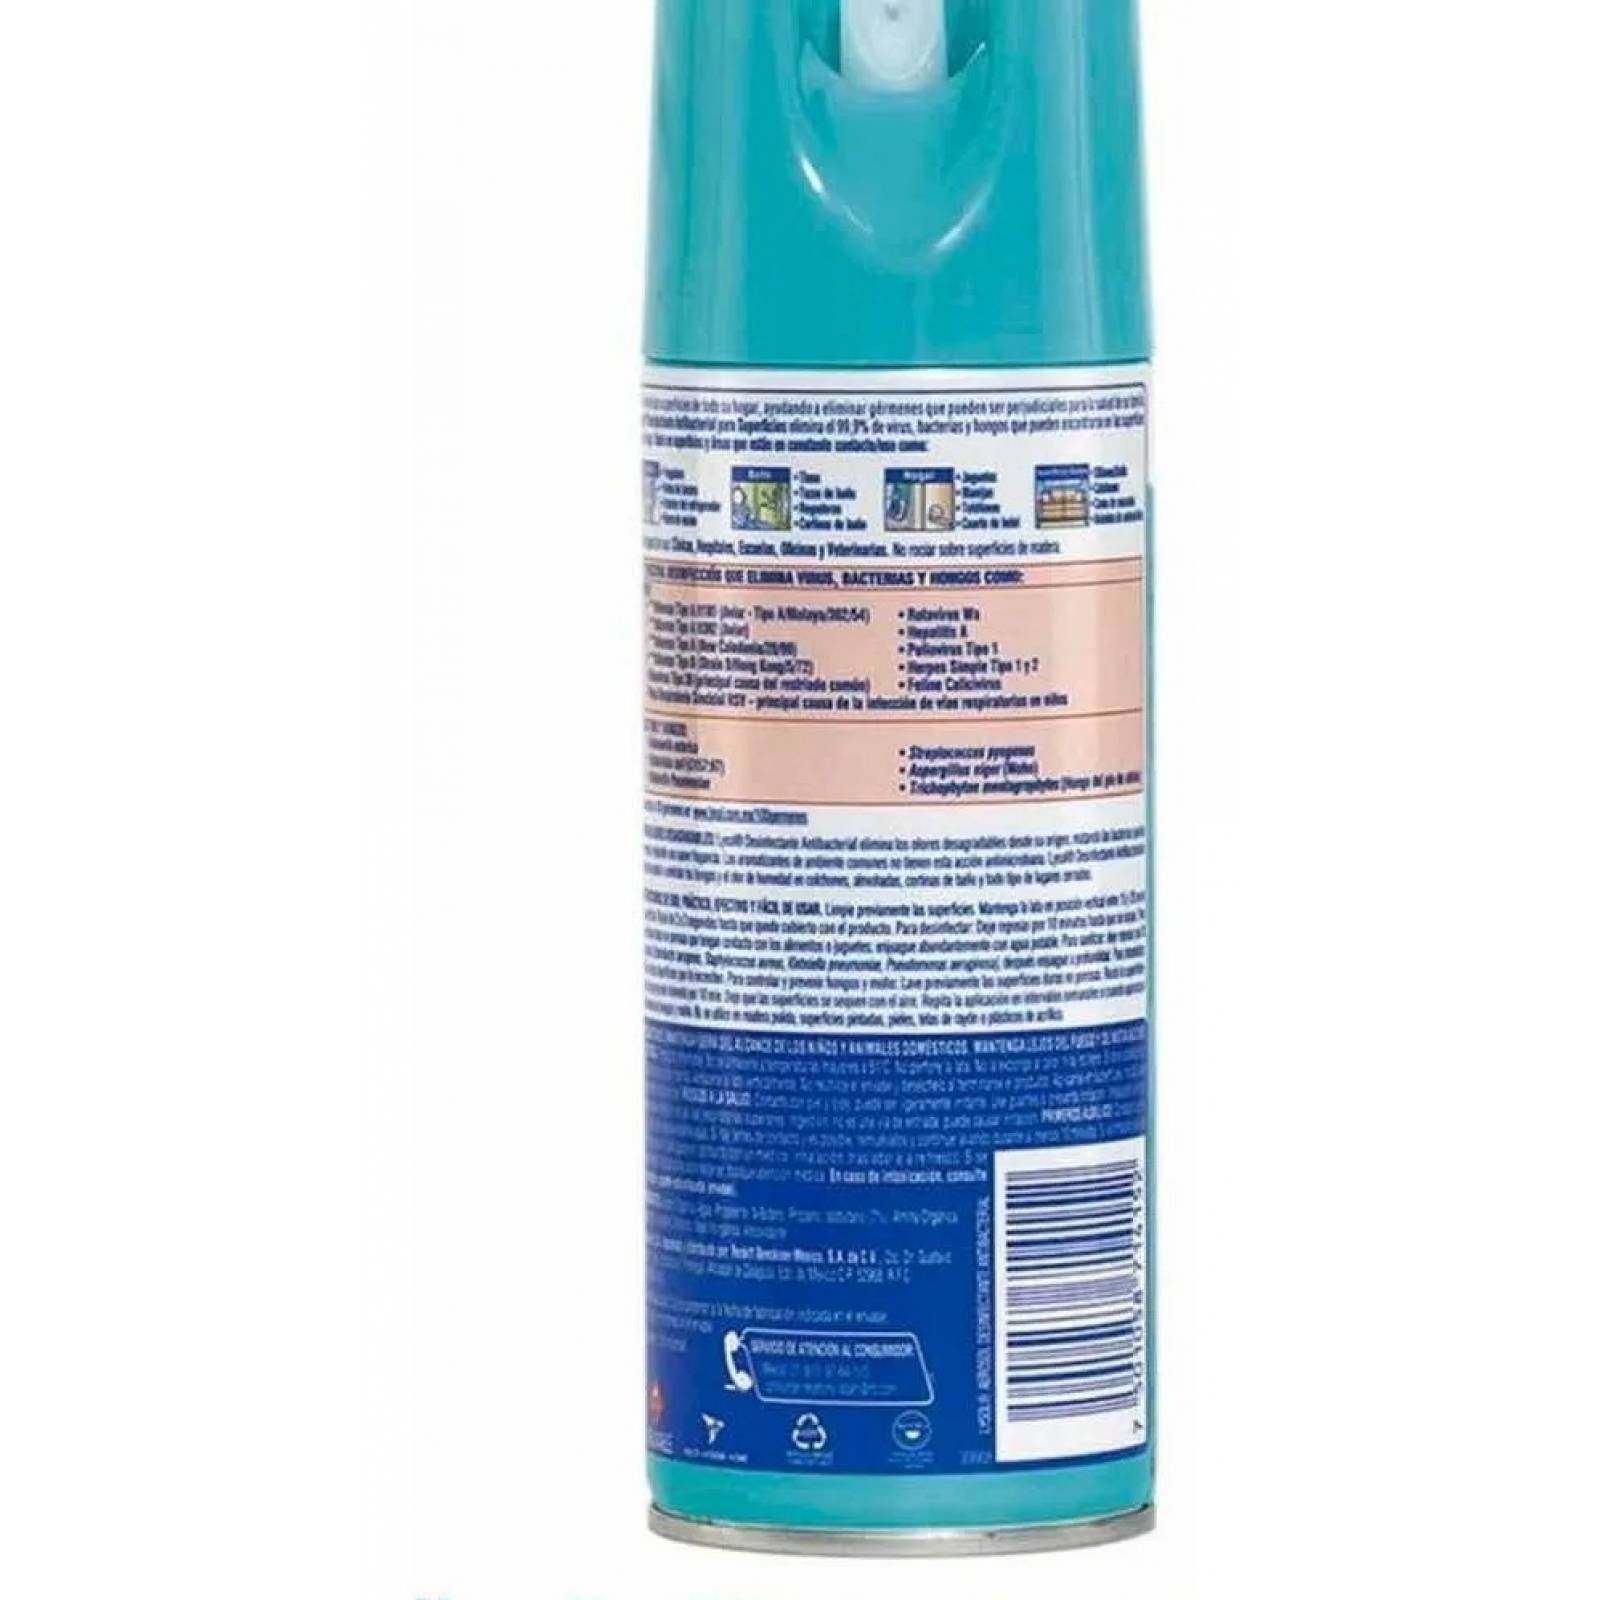 Spray Desinfectante Antibacterial Lysol Babys Room 354g X 2